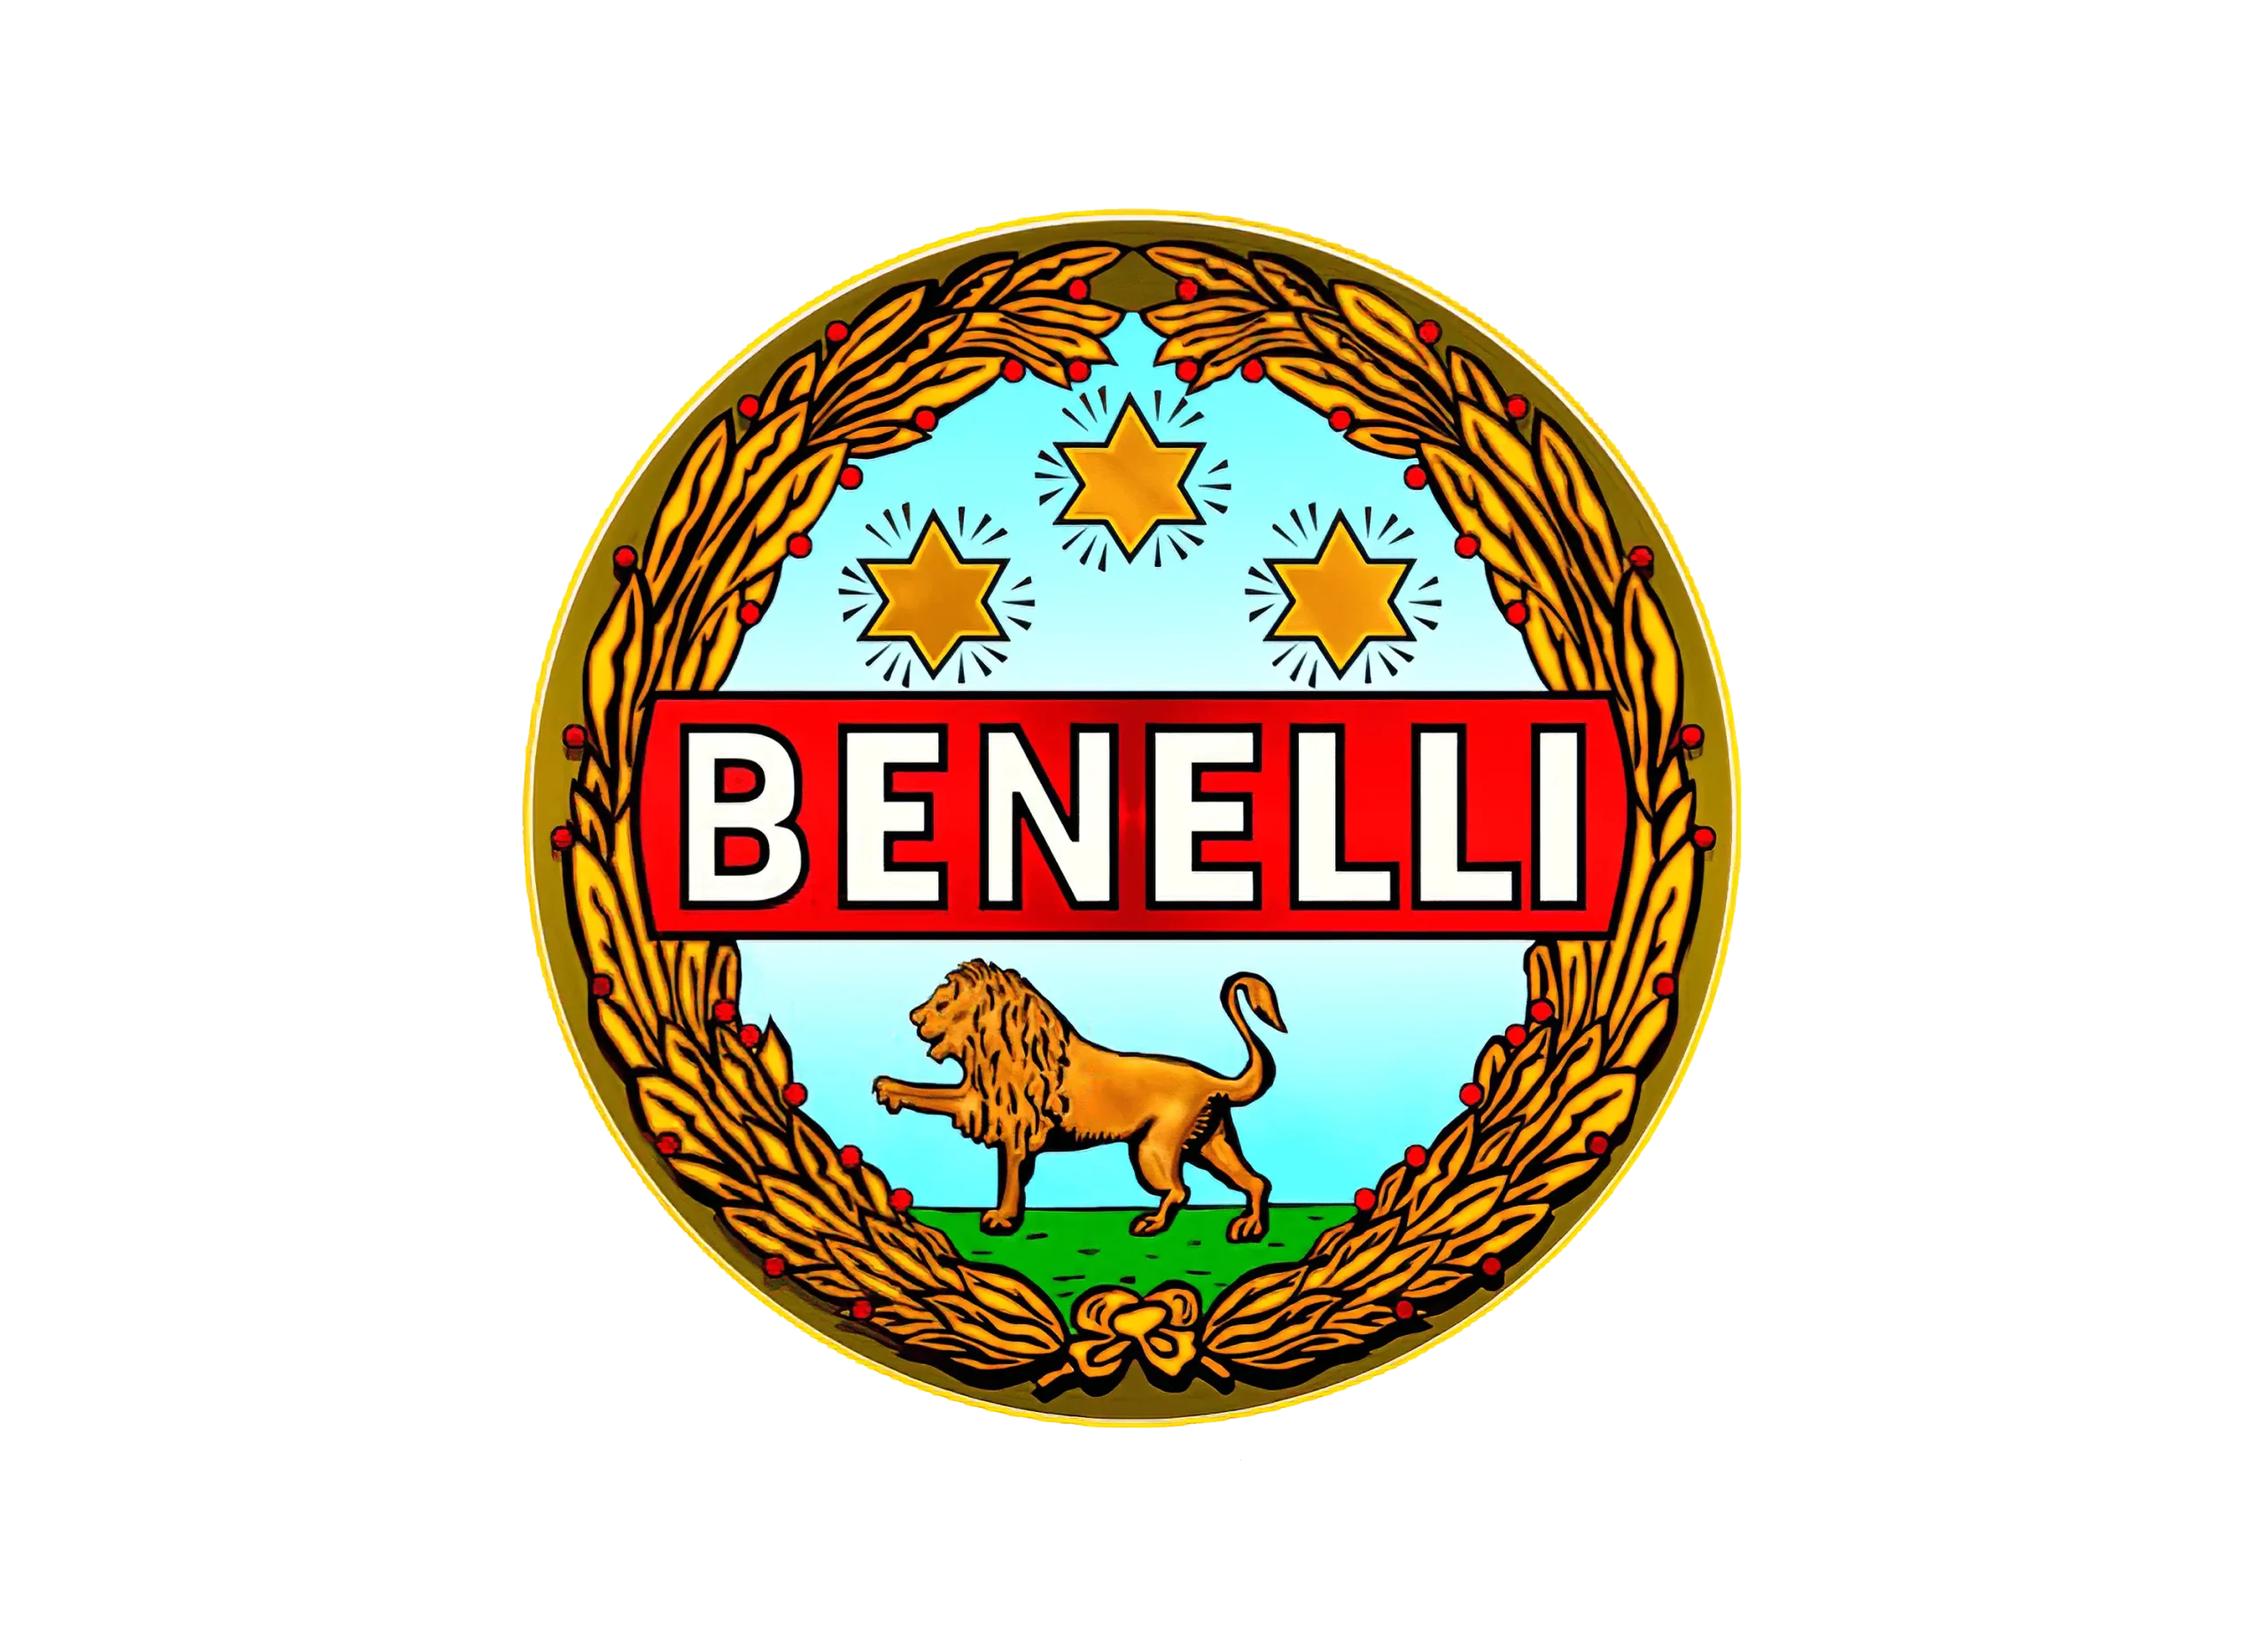 Benelli logo 1932-1951